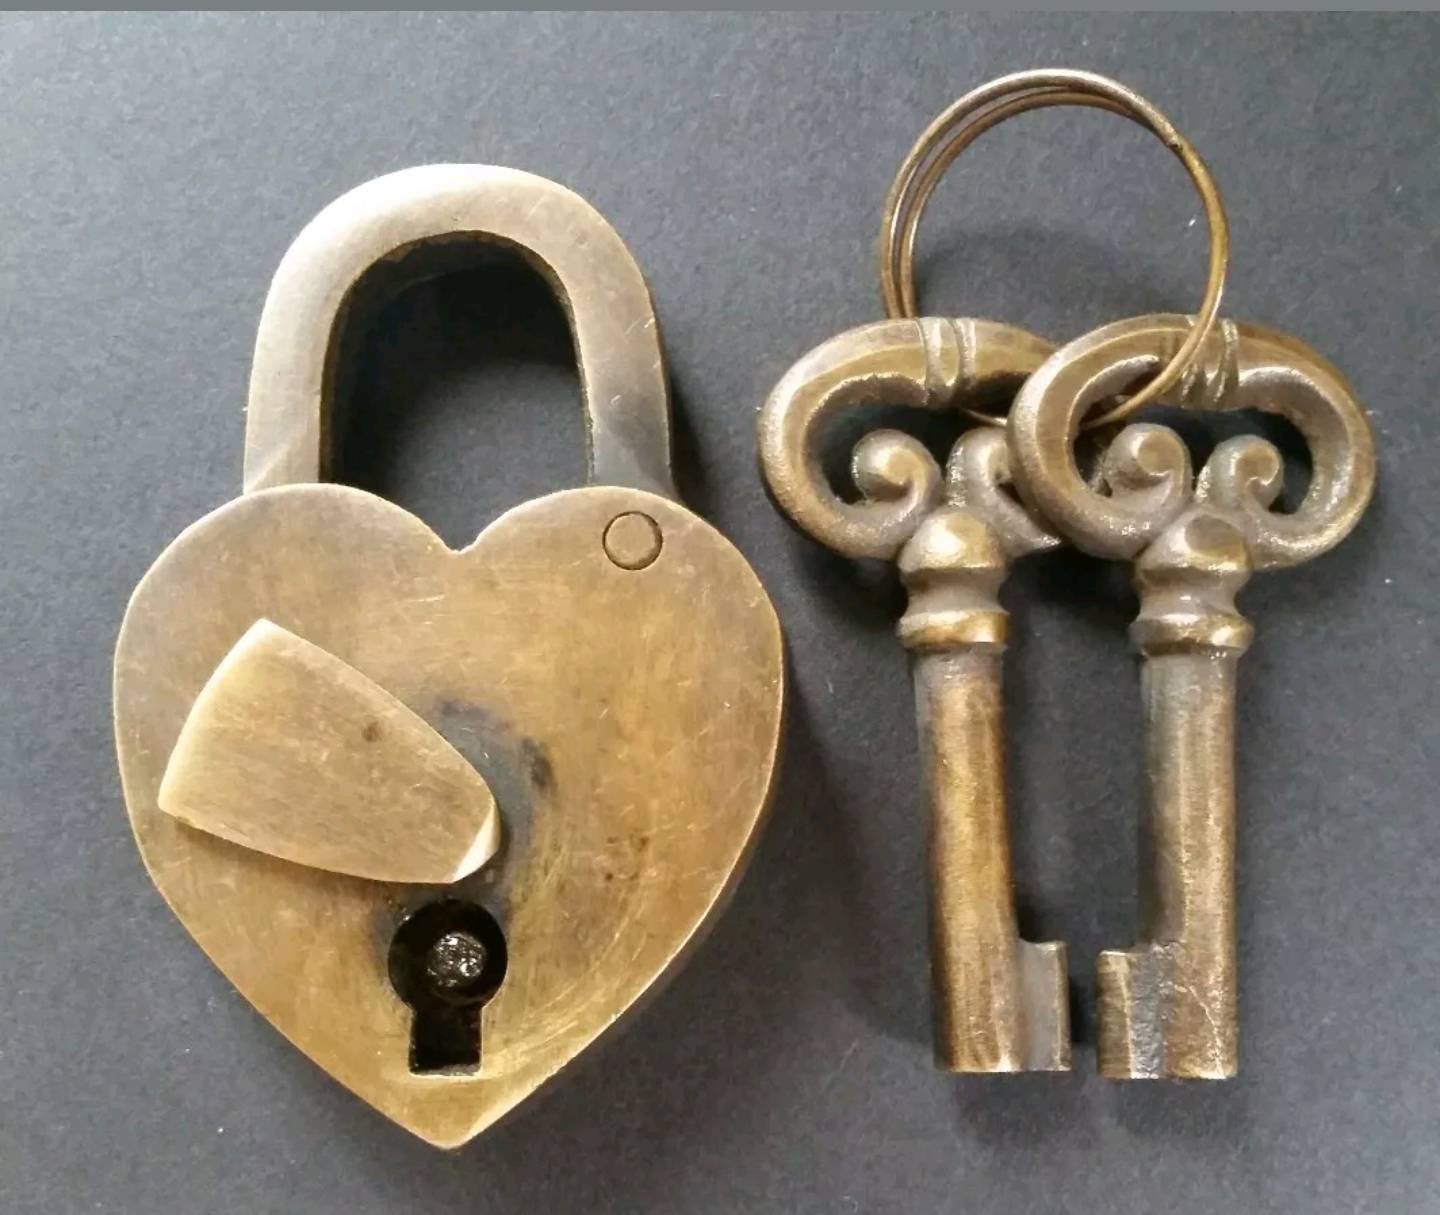 Escutcheons, Locks and Keys